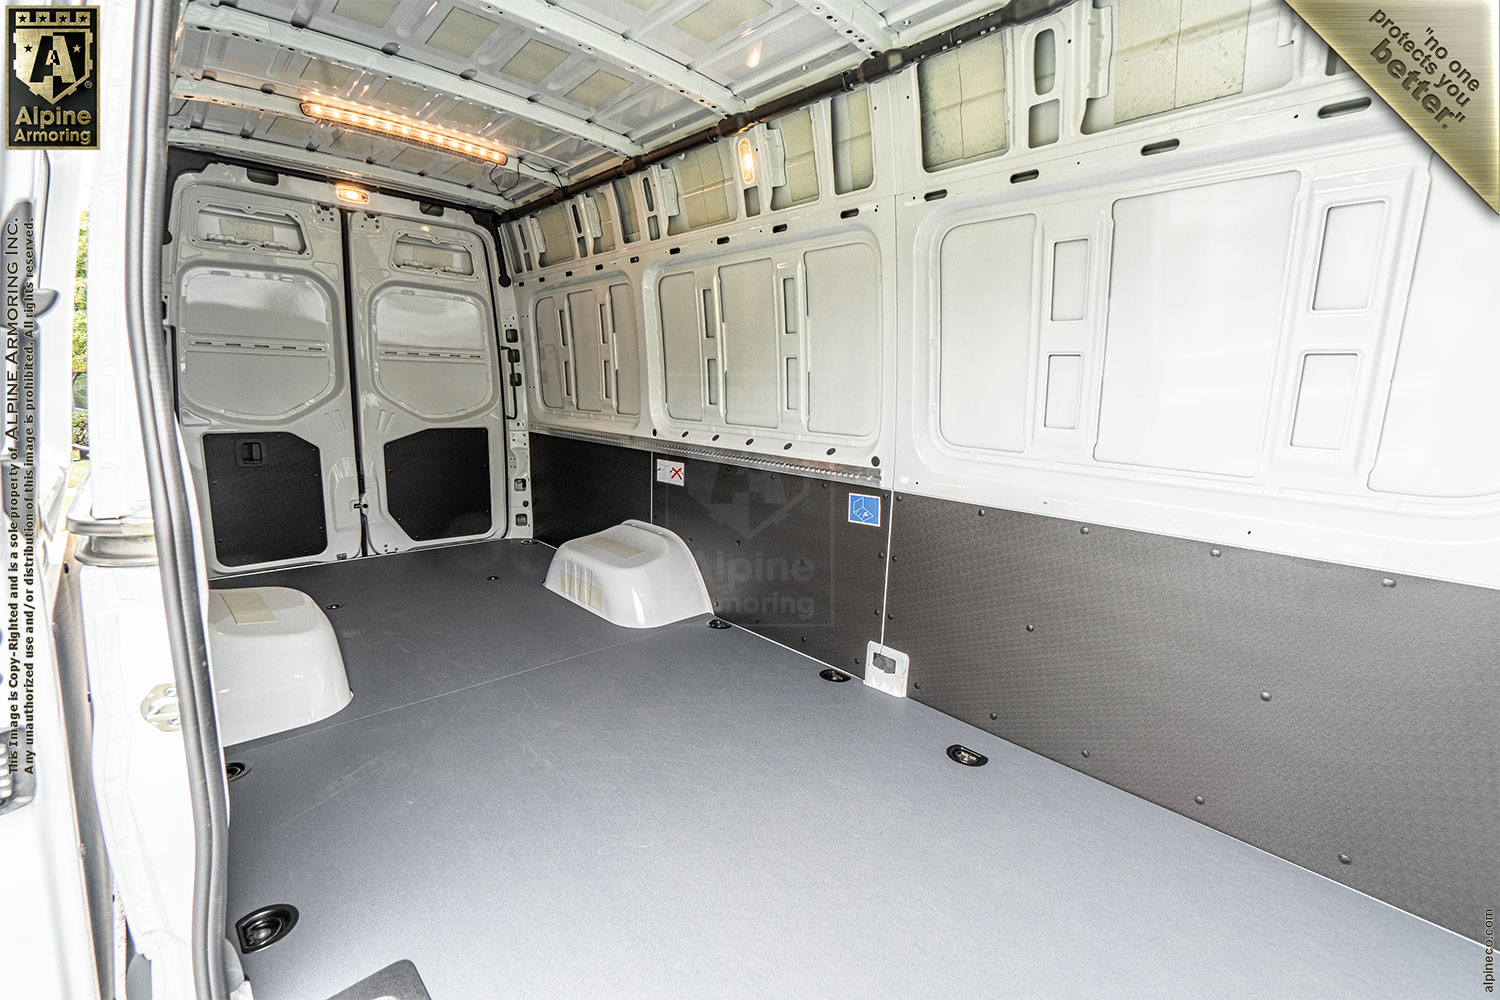 Inventory SWAT Van Pointer VIN:9820 Exterior Interior Images